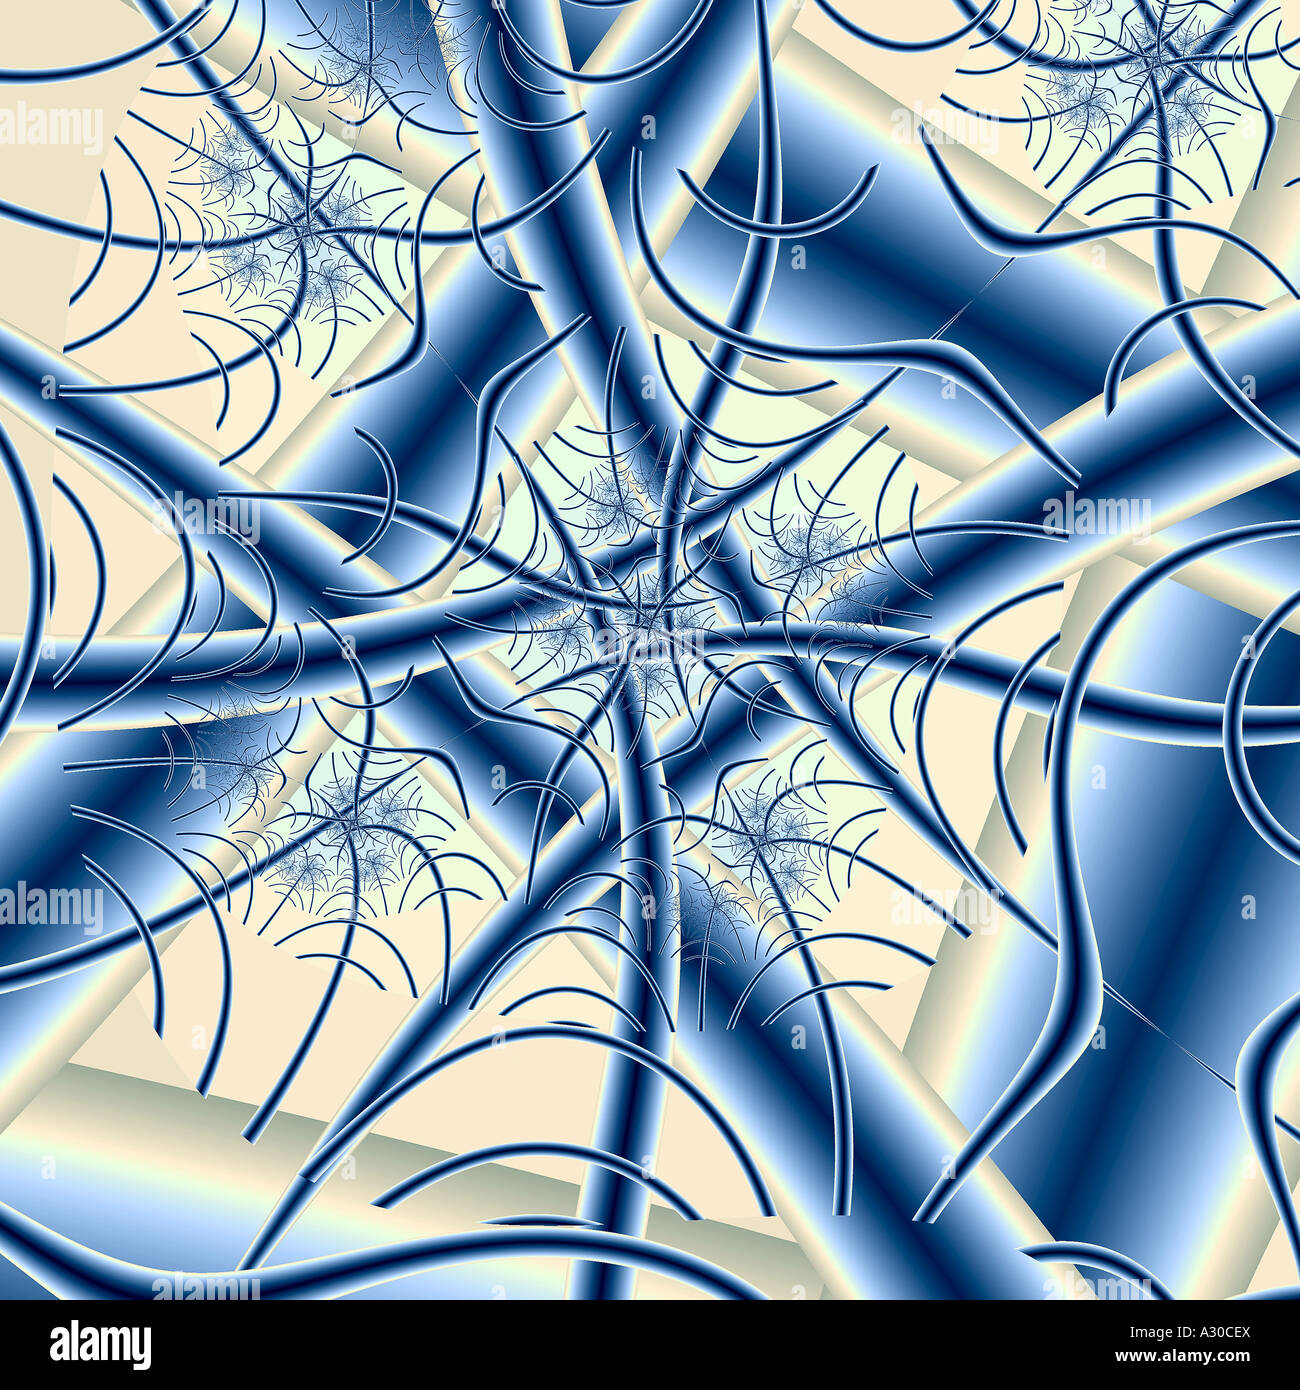 Computer generated fractal image blossom creative dream impression design digital effect raster illustration psycho blue Stock Photo